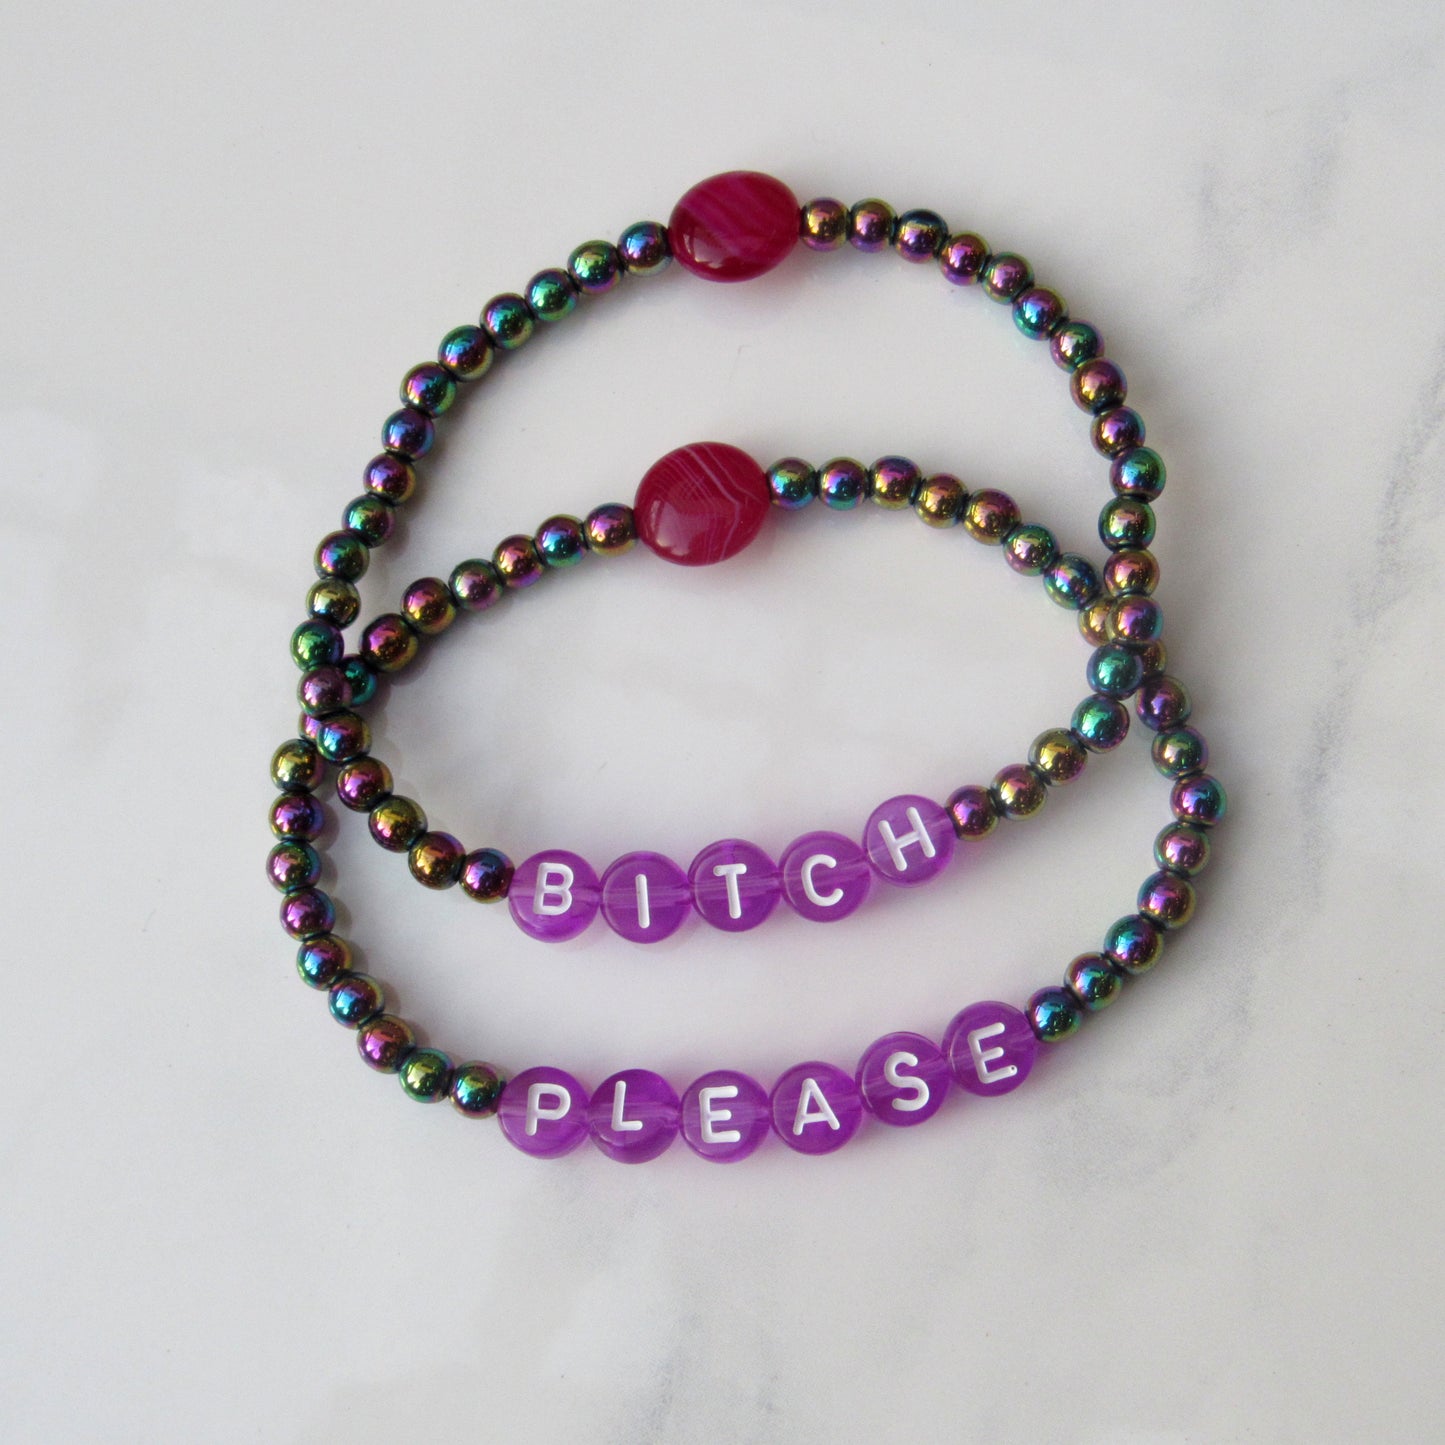 Rainbow Hematite and Pink Agate “Bitch Please” stretch Bracelet